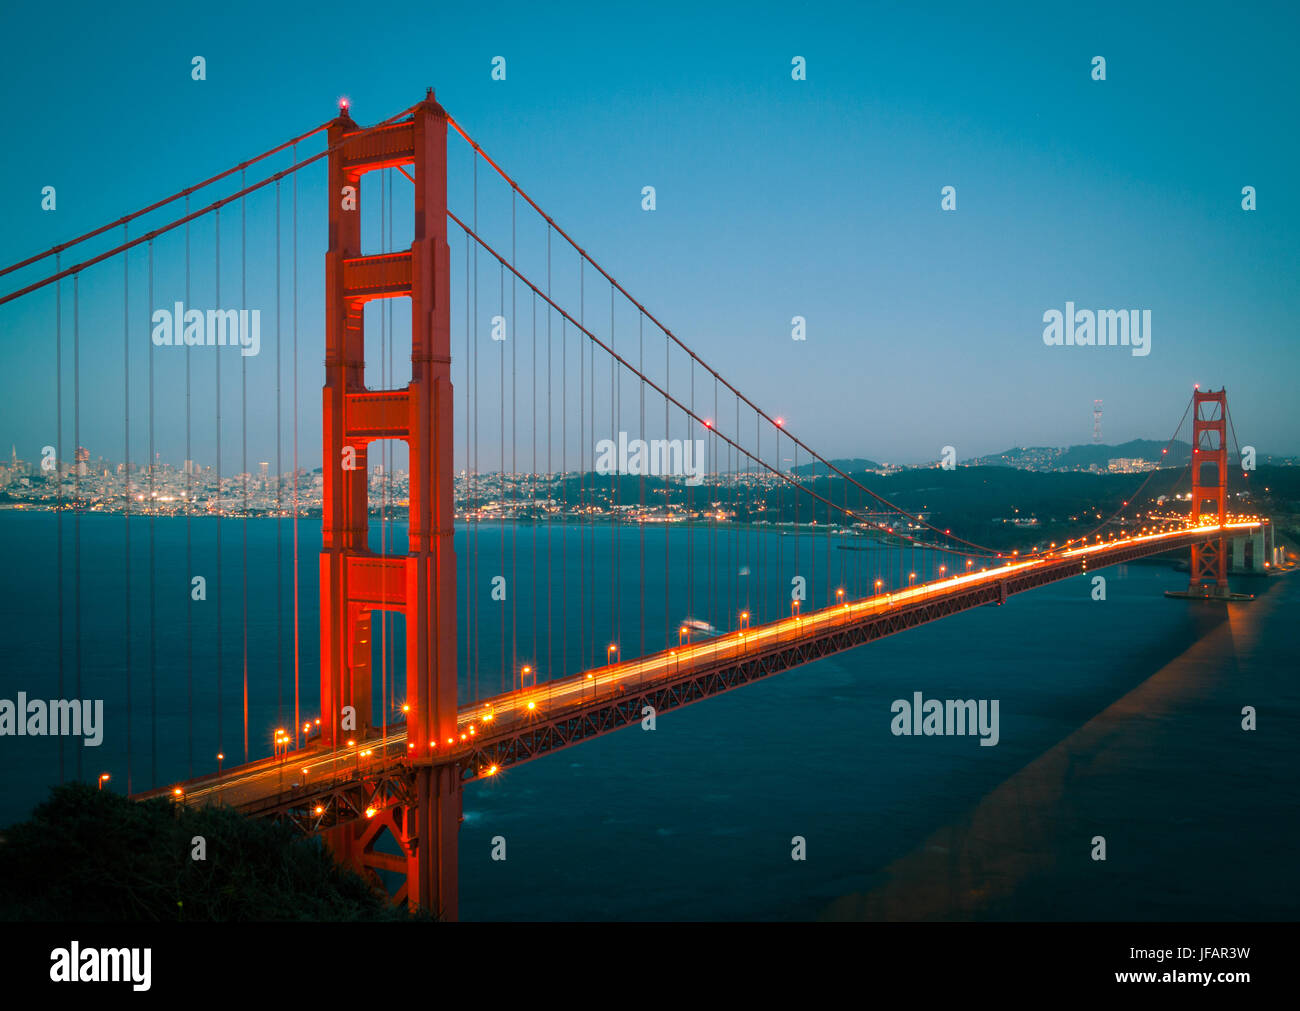 The spectacular Golden Gate Bridge at night in San Francisco, California. Stock Photo